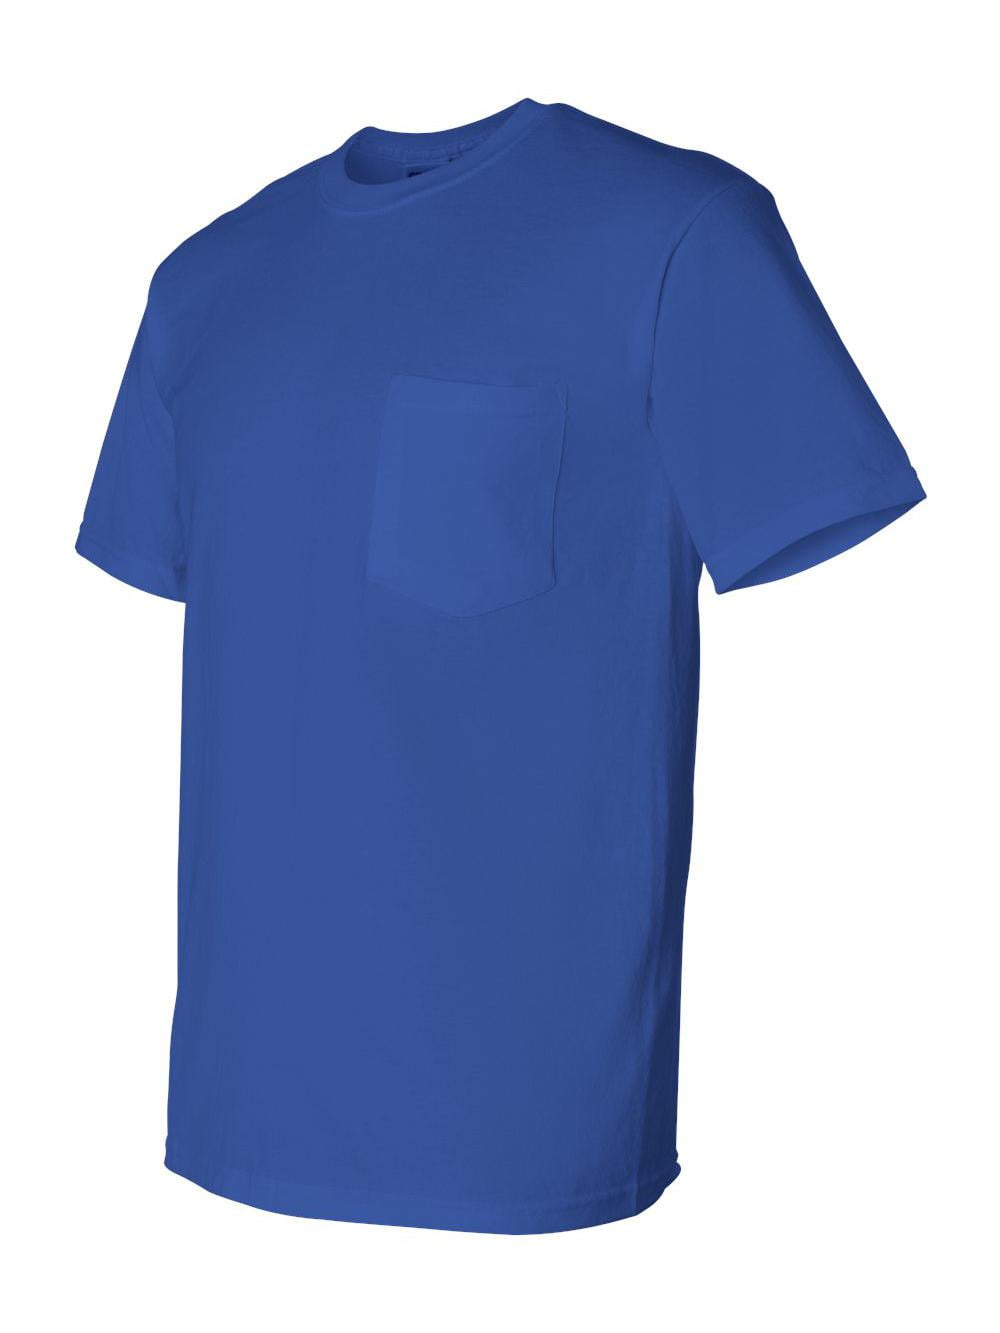 Gildan - Gildan - DryBlend Pocket T-Shirt - 8300 - Walmart.com ...